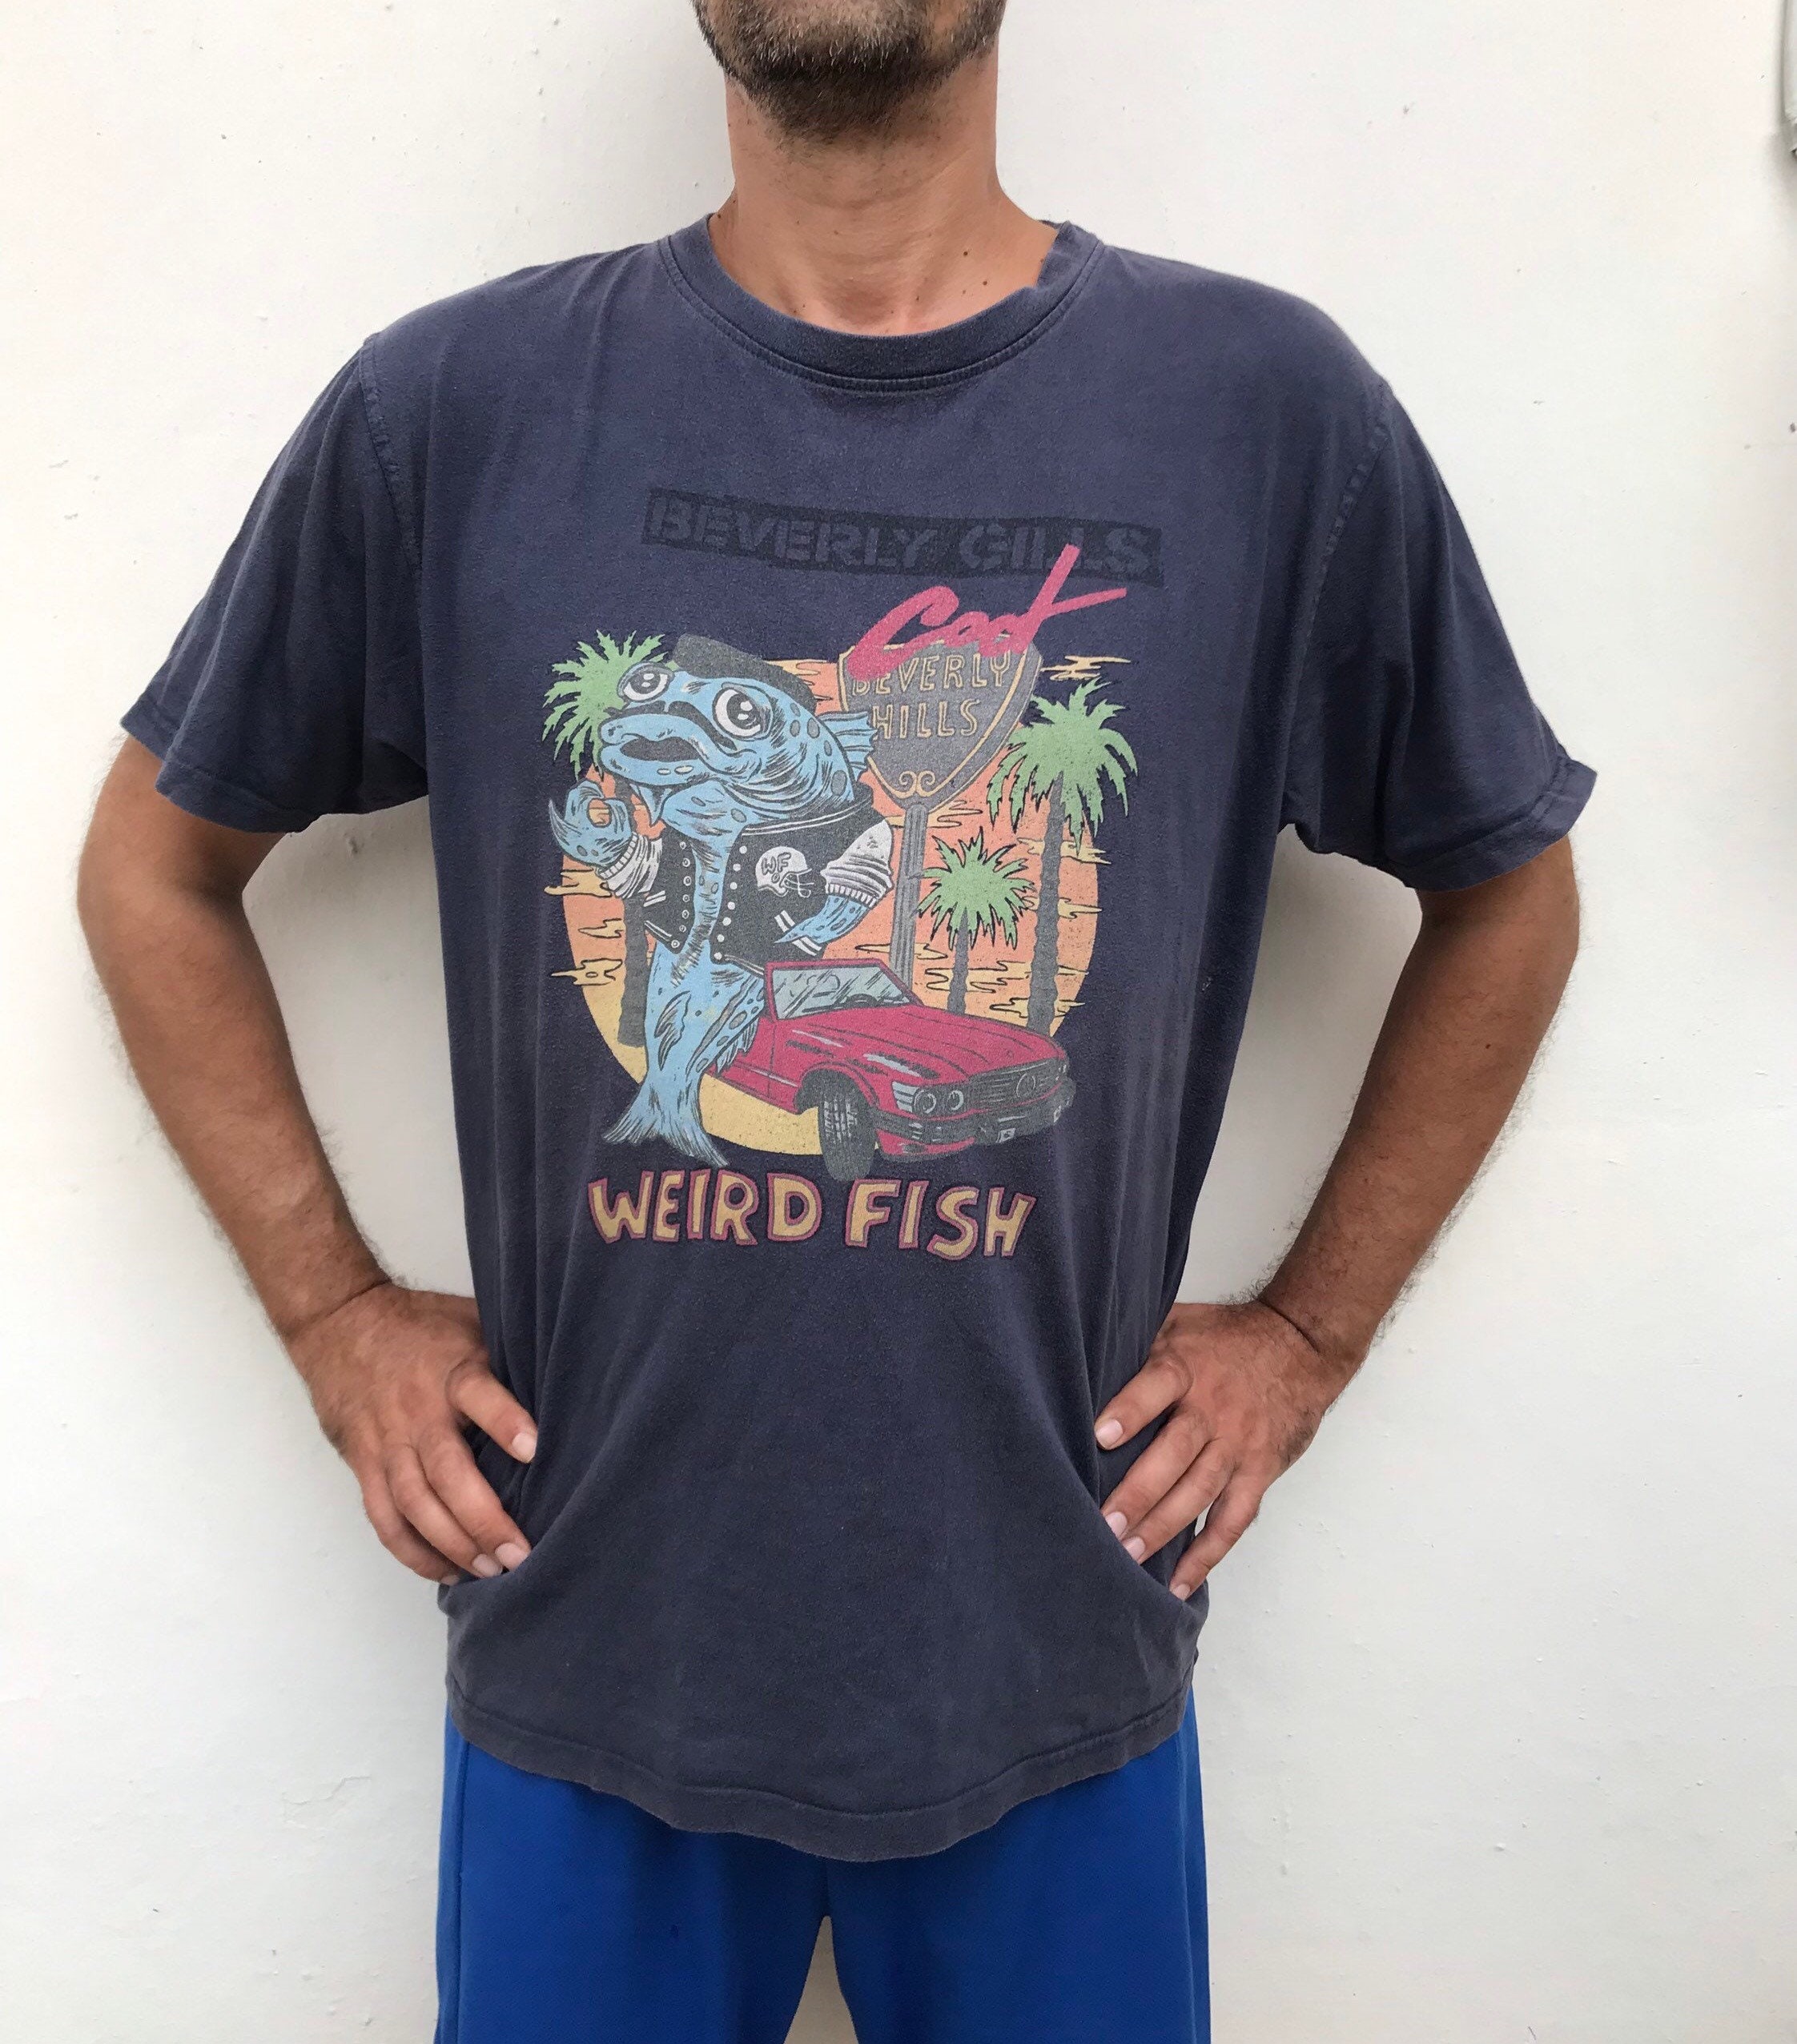 Weird Fish 90s Vintage Cotton T-shirt Featuring Humorous, Parody